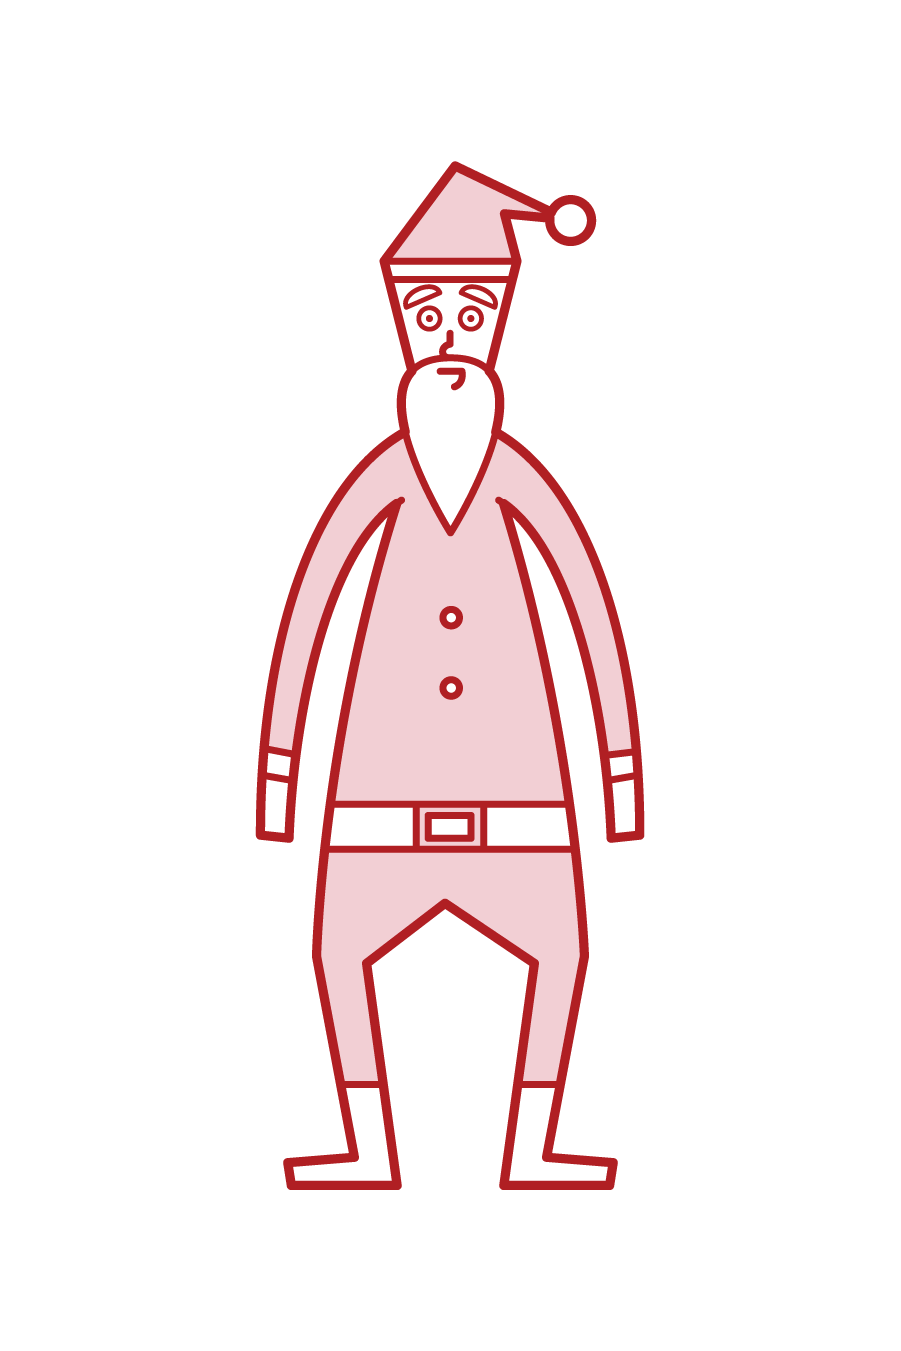 Illustrations of Santa Claus